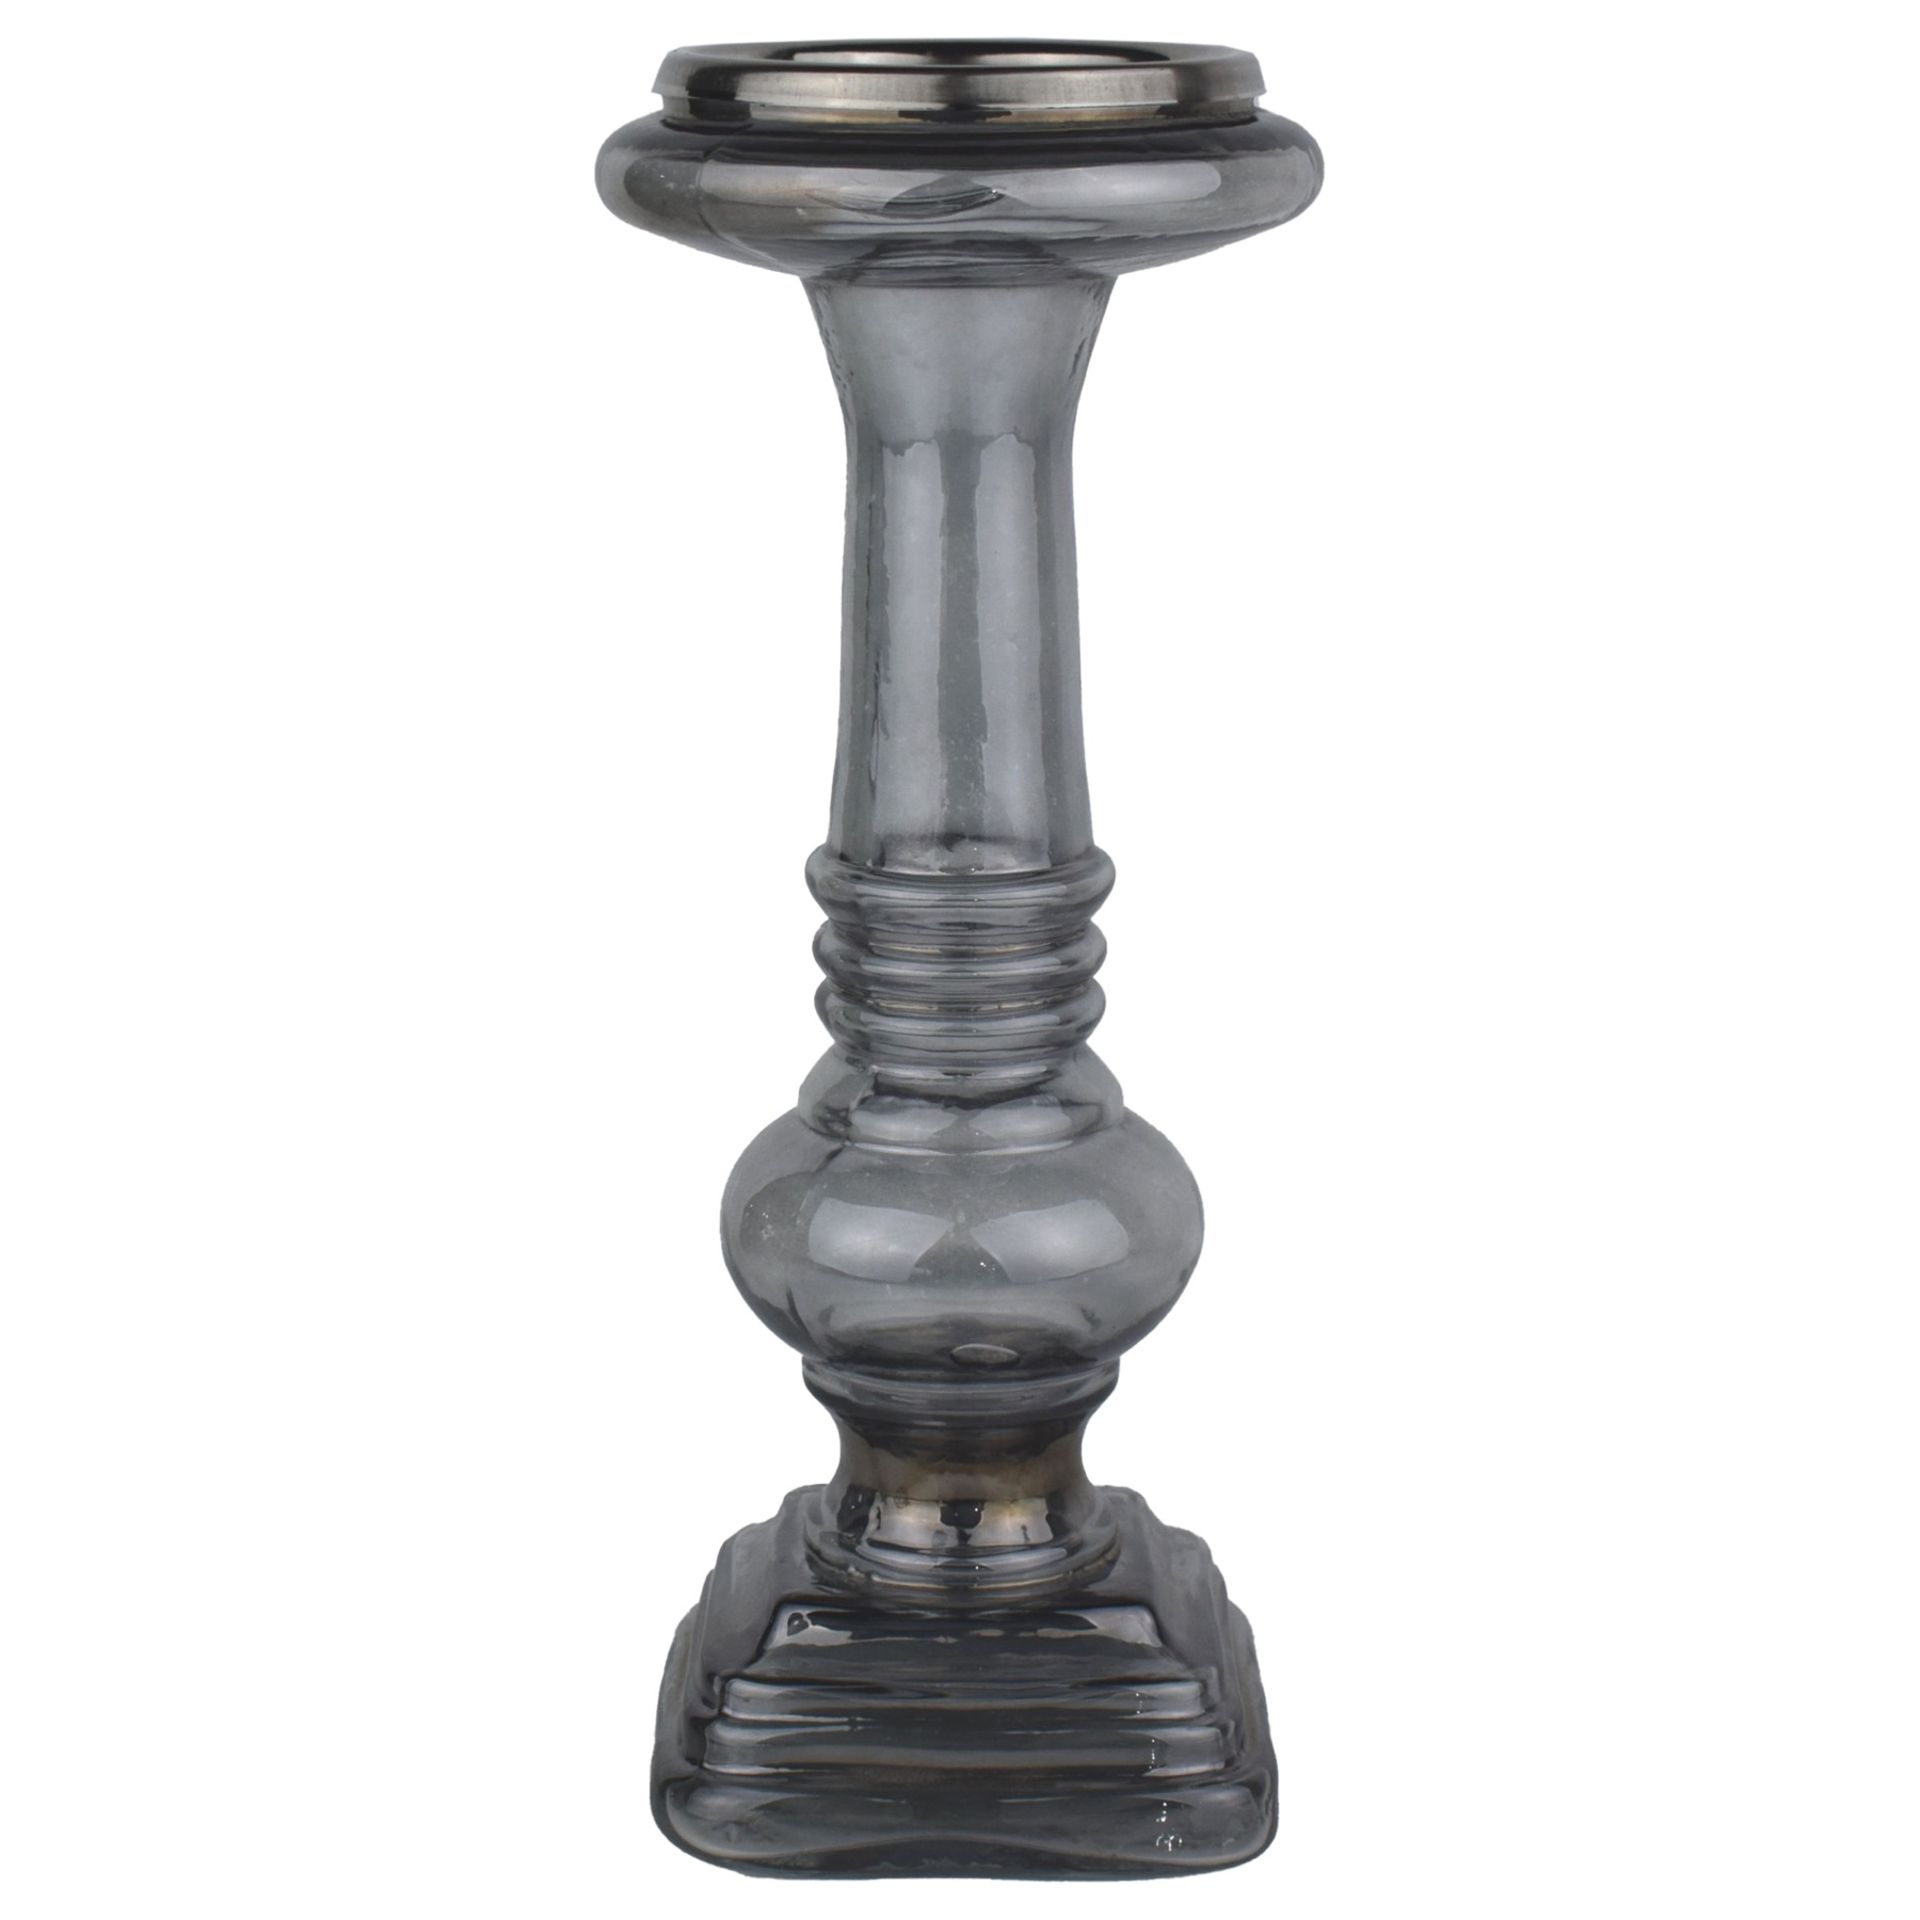 New Smoked Midnight Candle Pillar 21932 - 10L x 10W x 28H